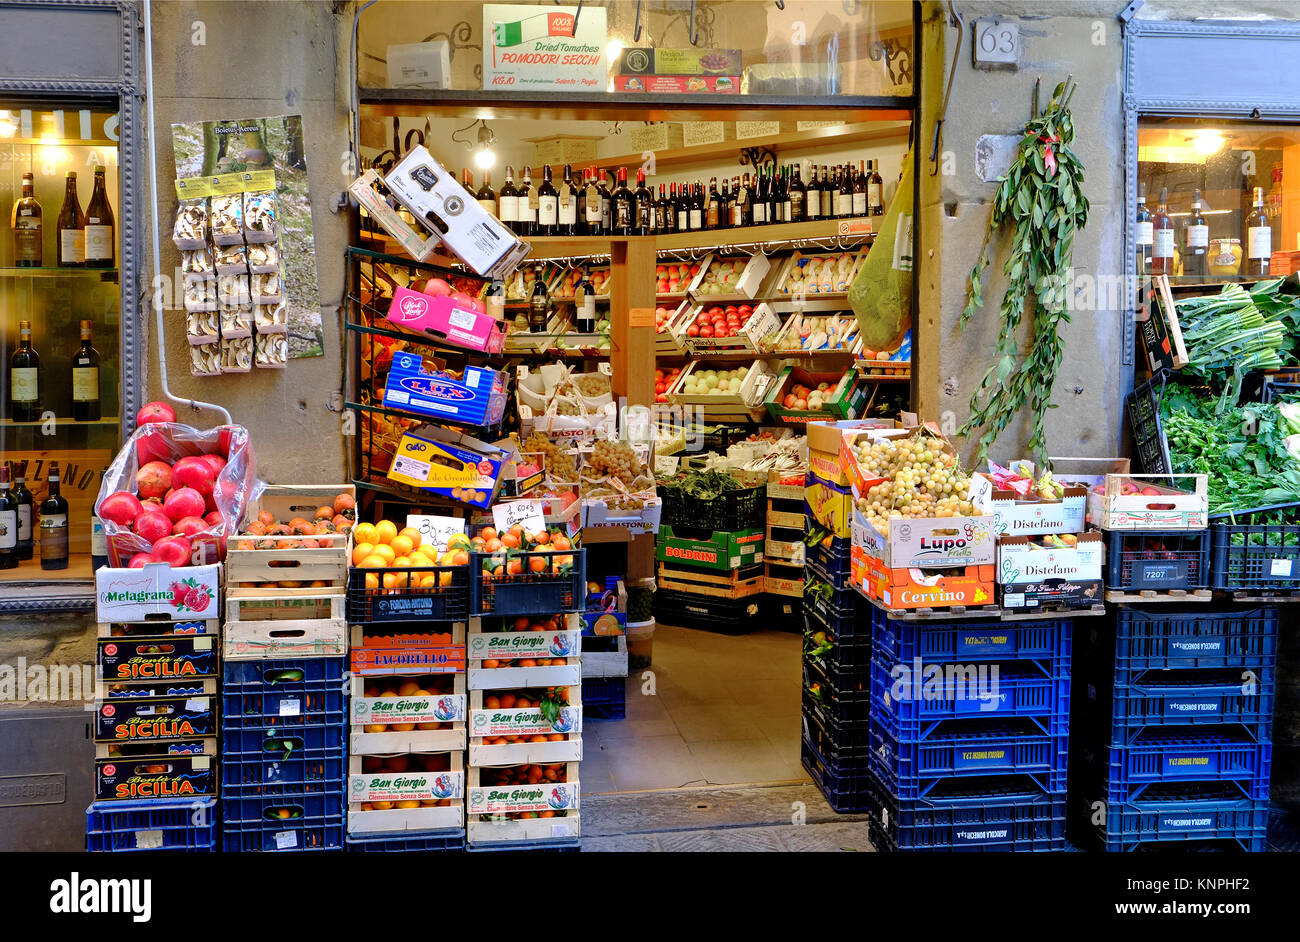 Italian Grocery Store Stock Photos & Italian Grocery Store Stock ...